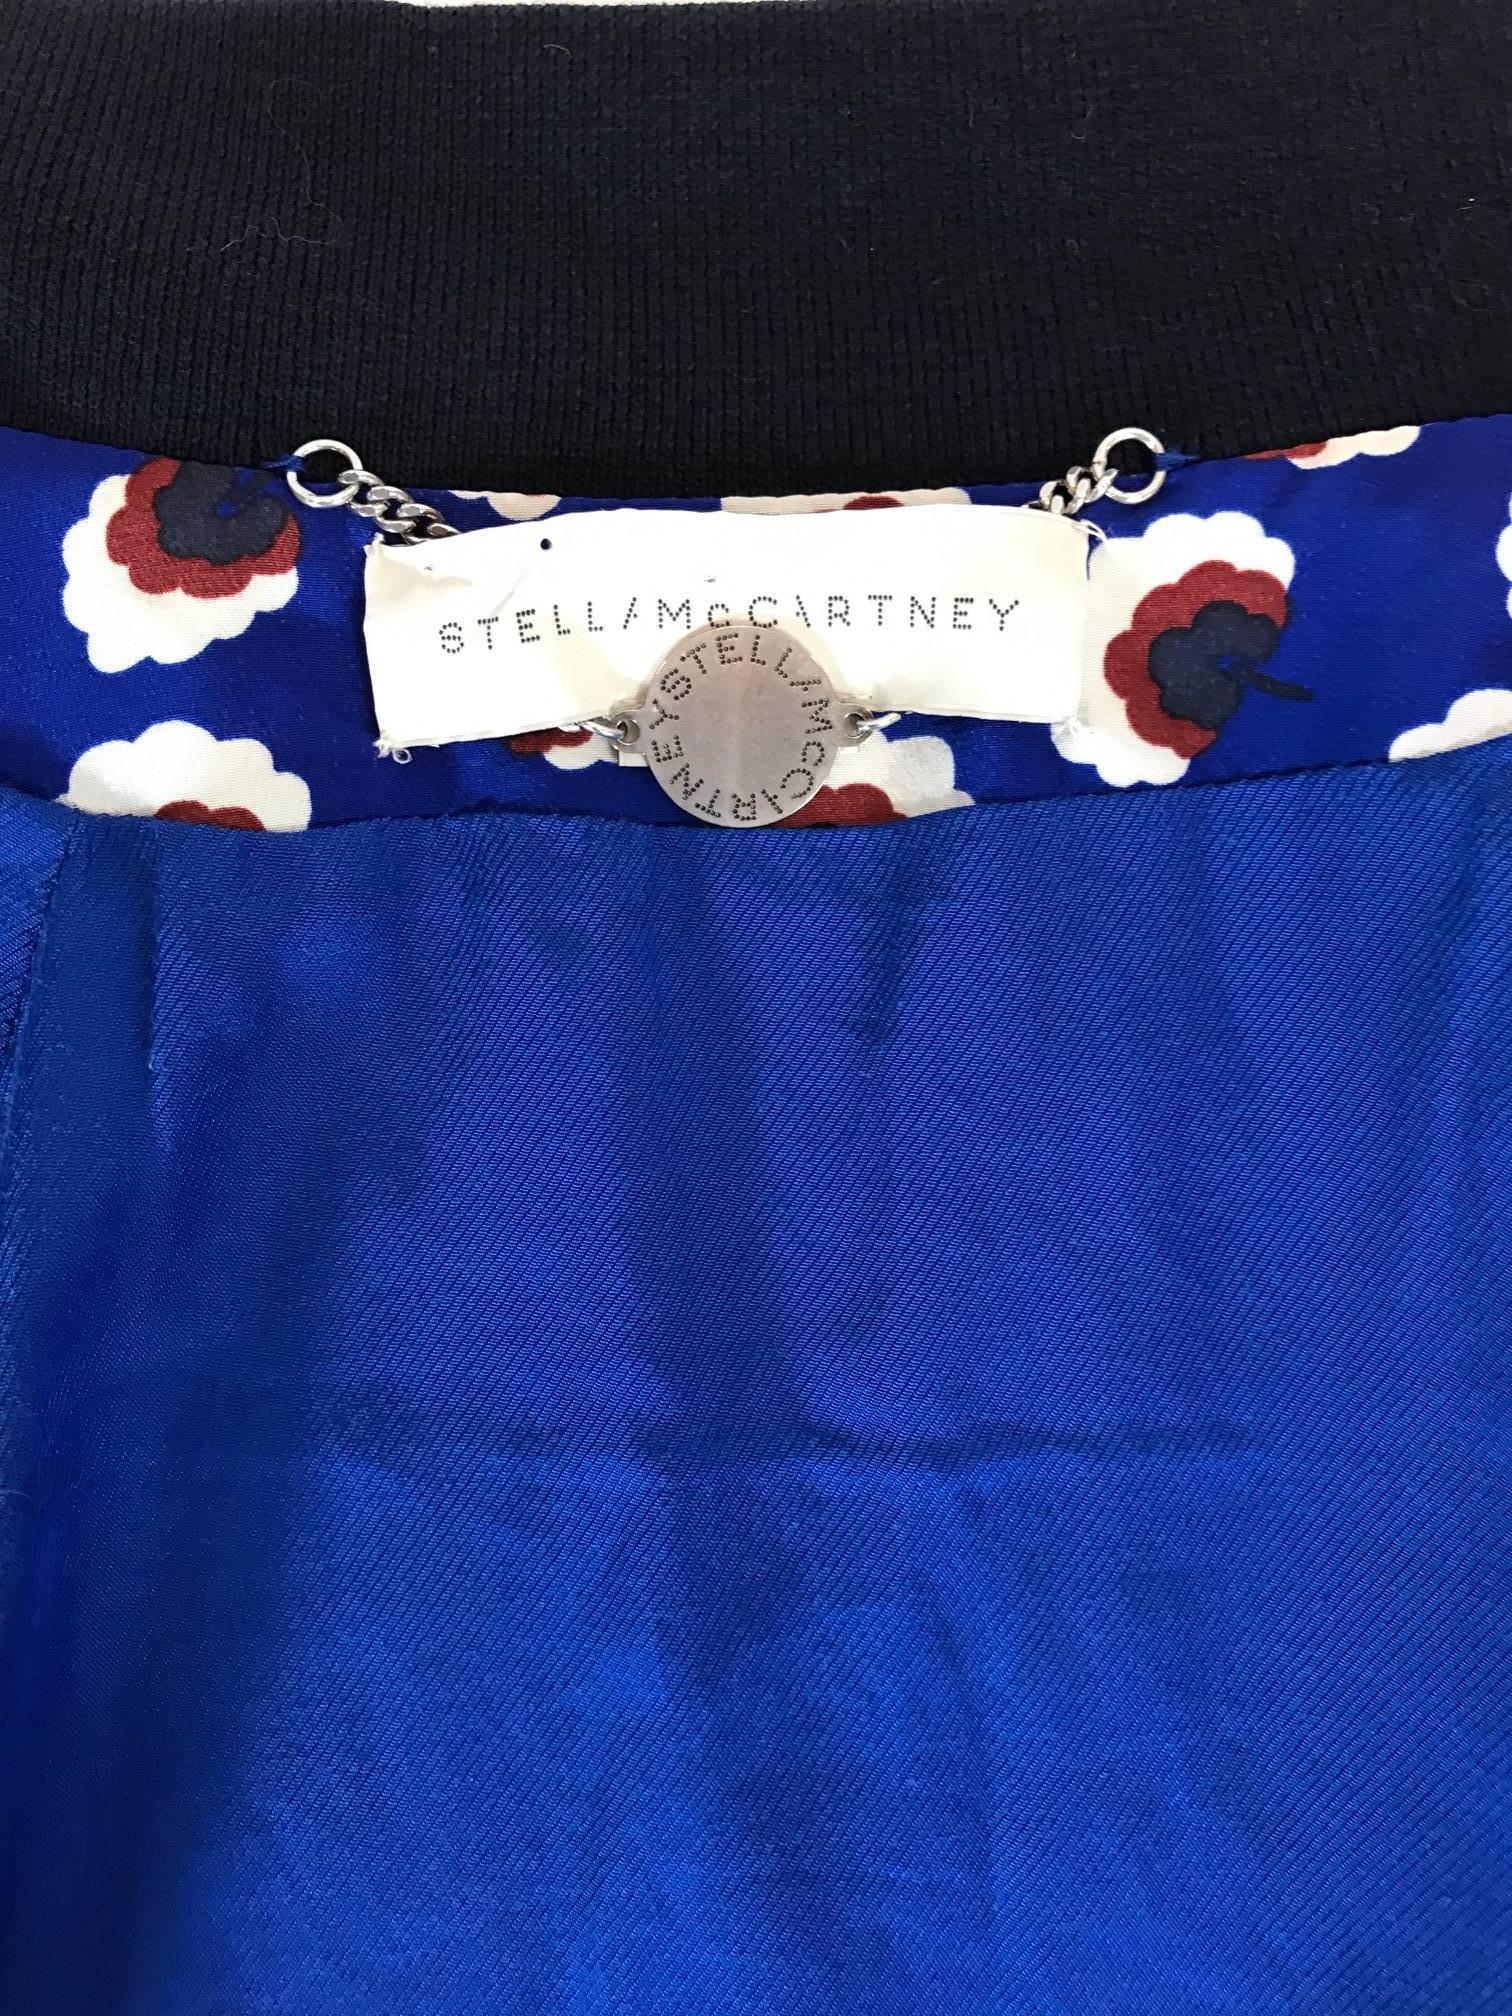 stella mccartney floral jacket